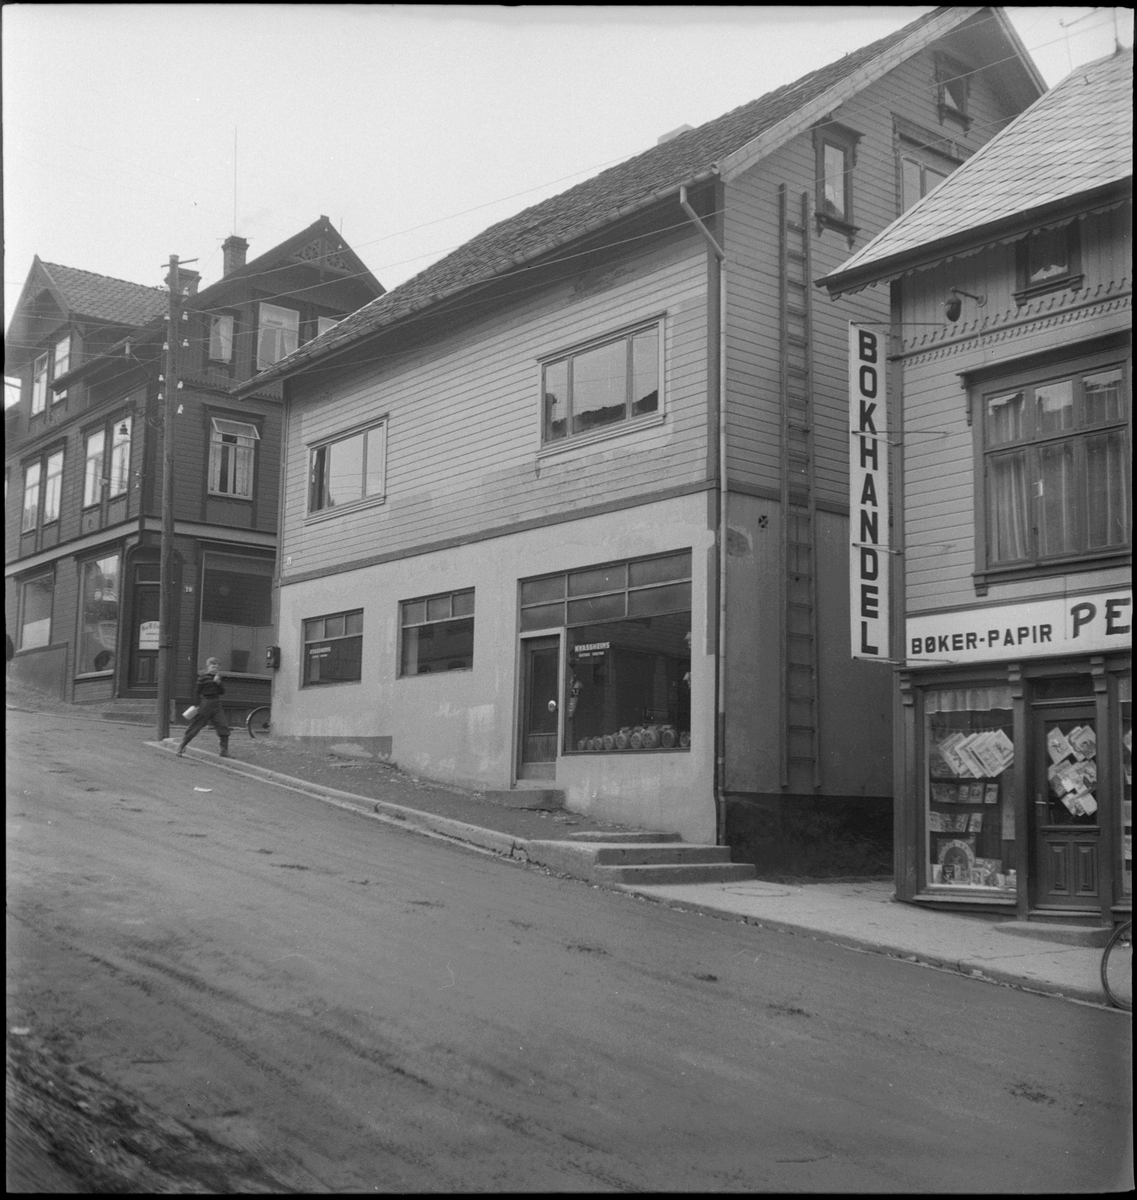 Kvassheim Elektriske forretning i Johan Feyers gate, Egersund. Per Danckes bokhandel ligger i nabobygget.